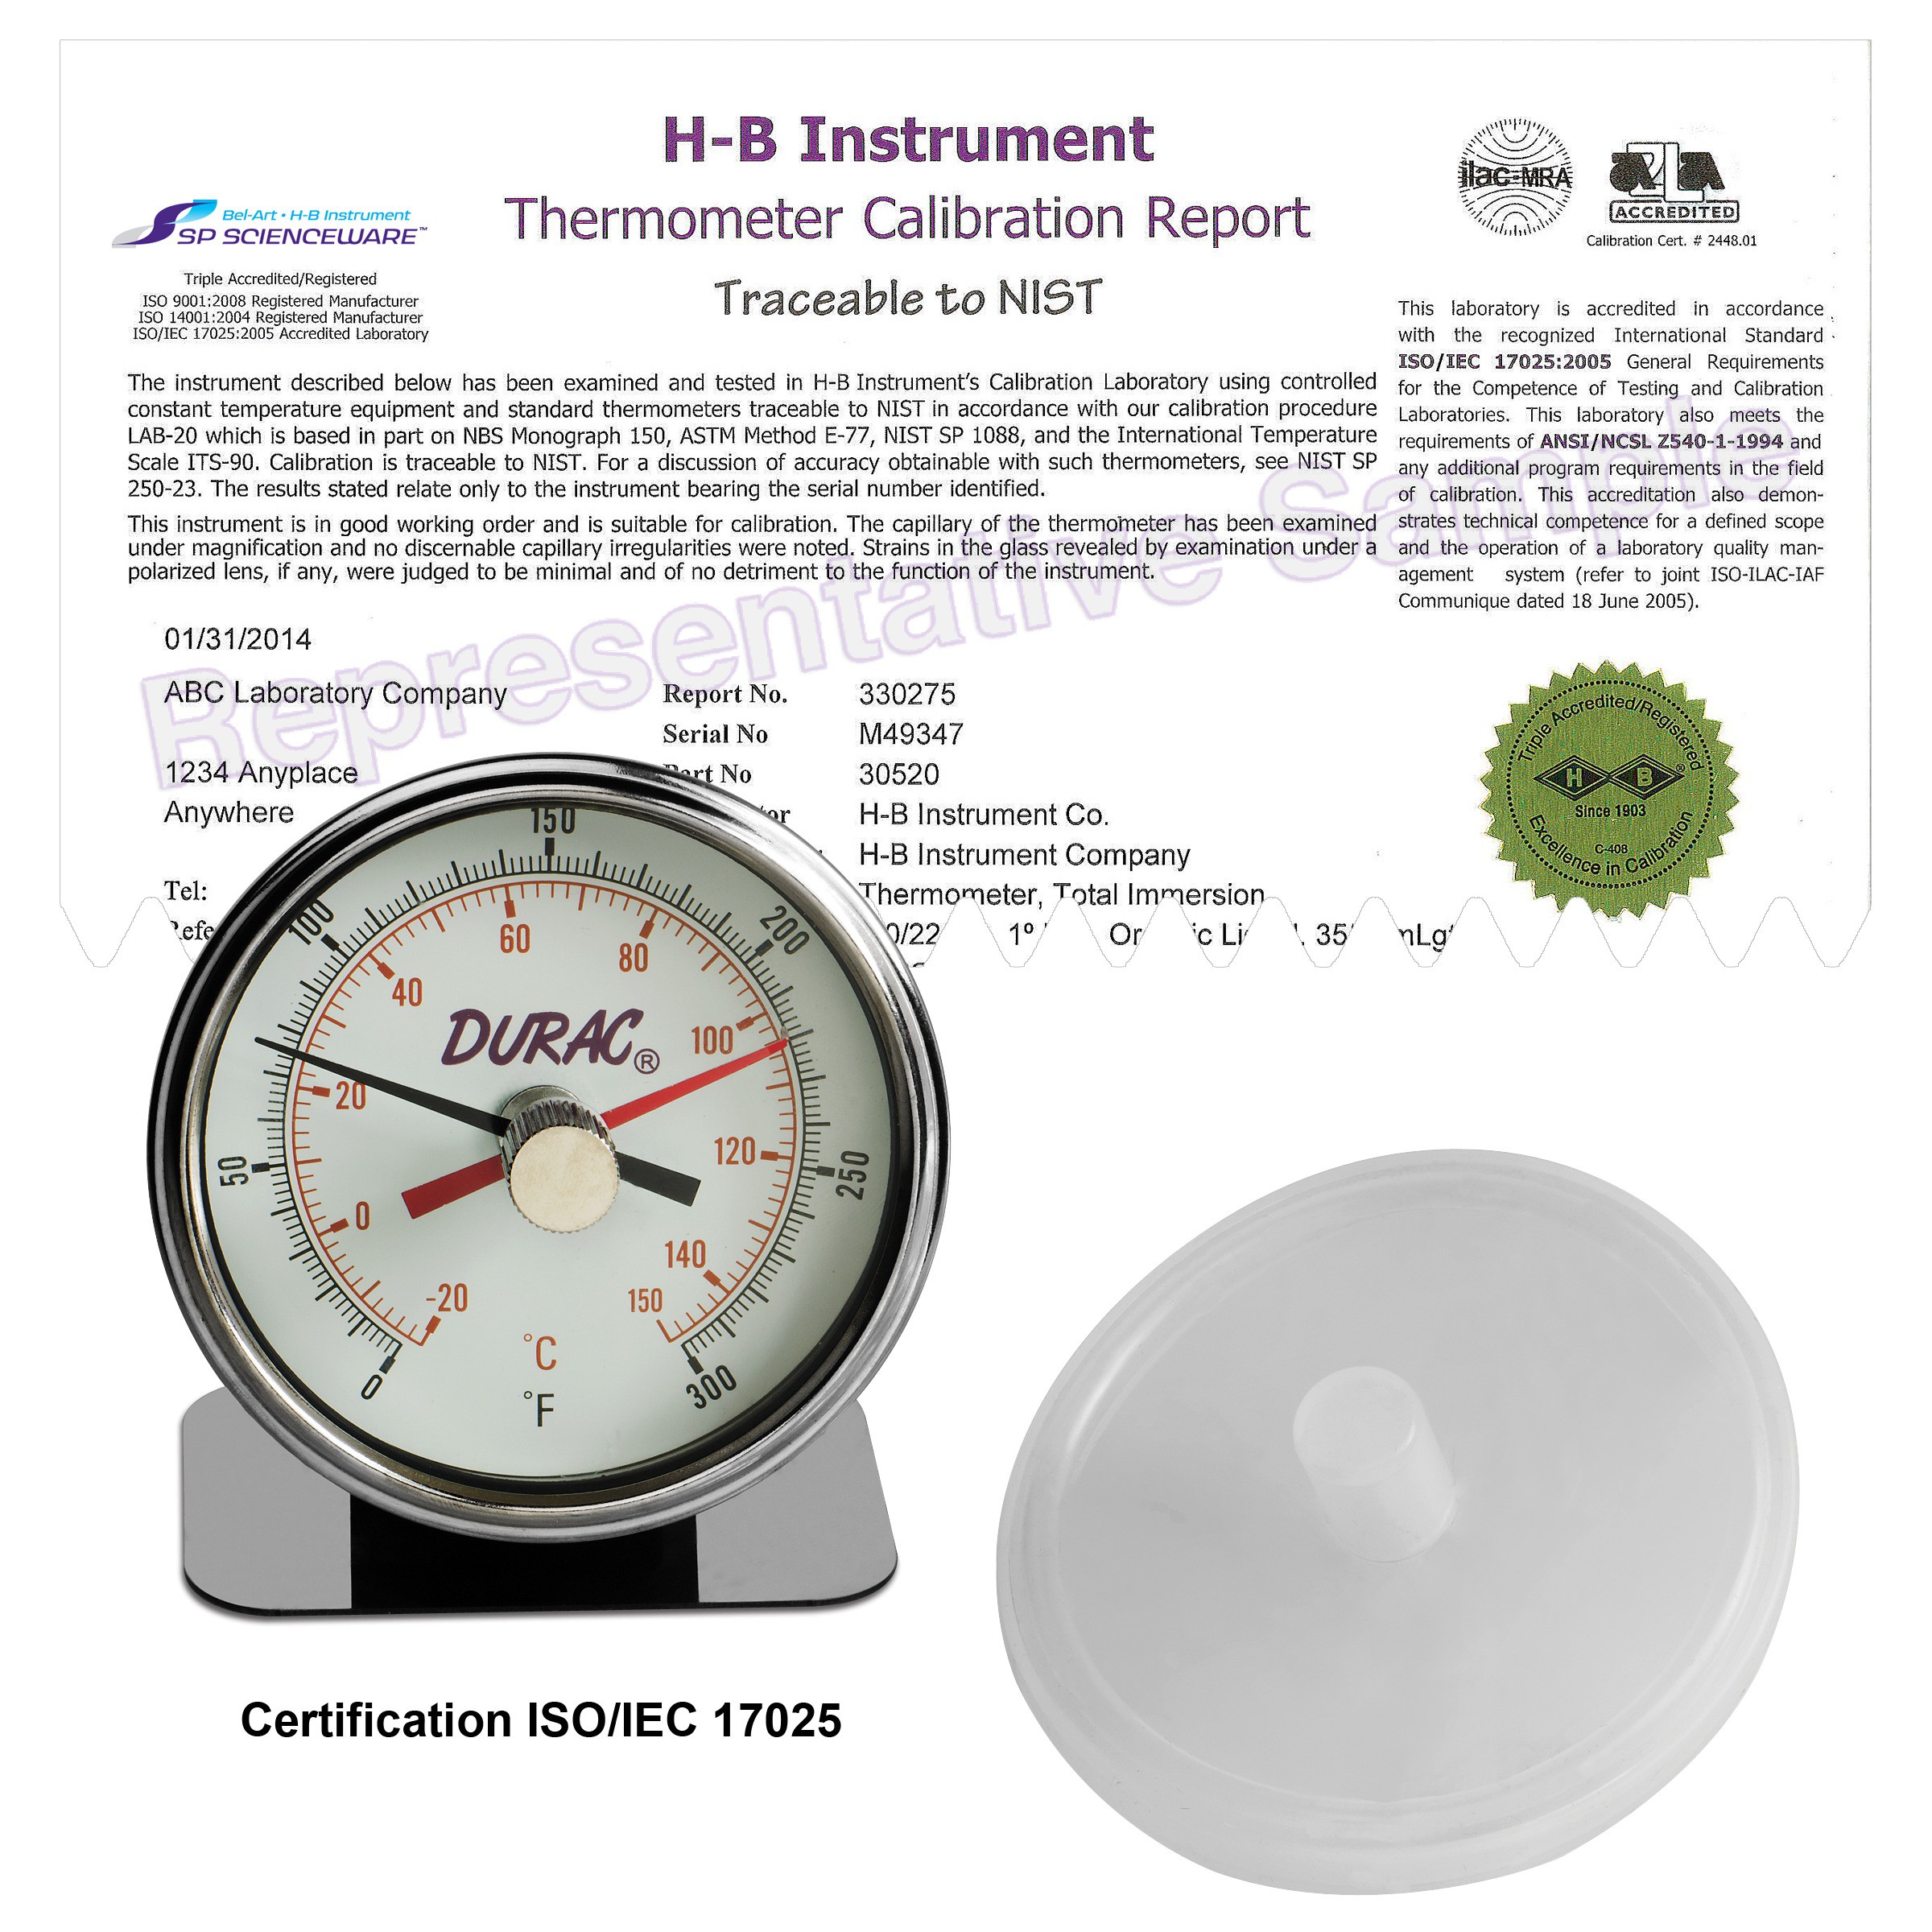 H-B DURAC Maximum Registering / Autoclave Bi-Metal Thermometer; -20 to 150C (0 to 300F), Individual Calibration Report